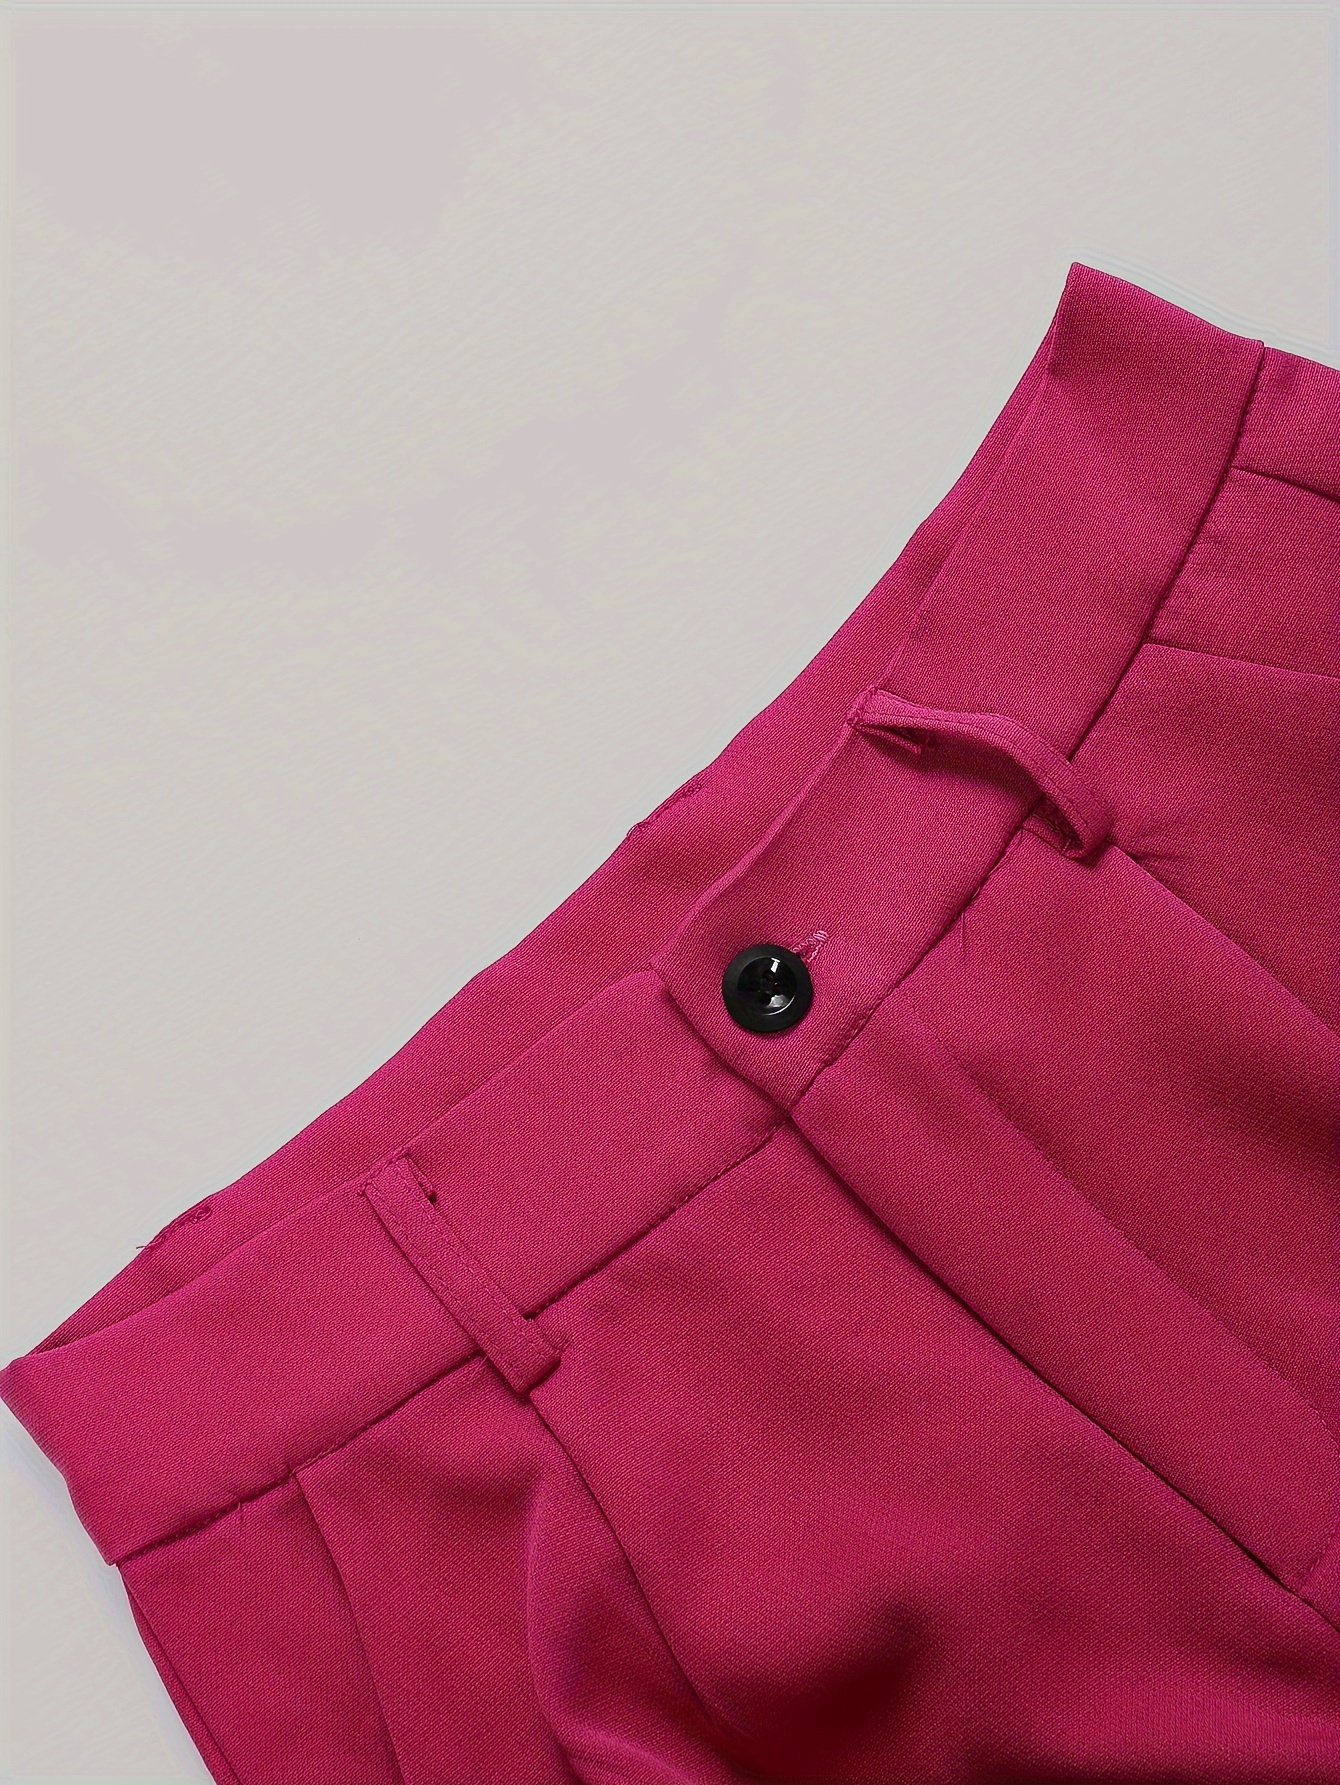 Zara geometric print pants and blouse set